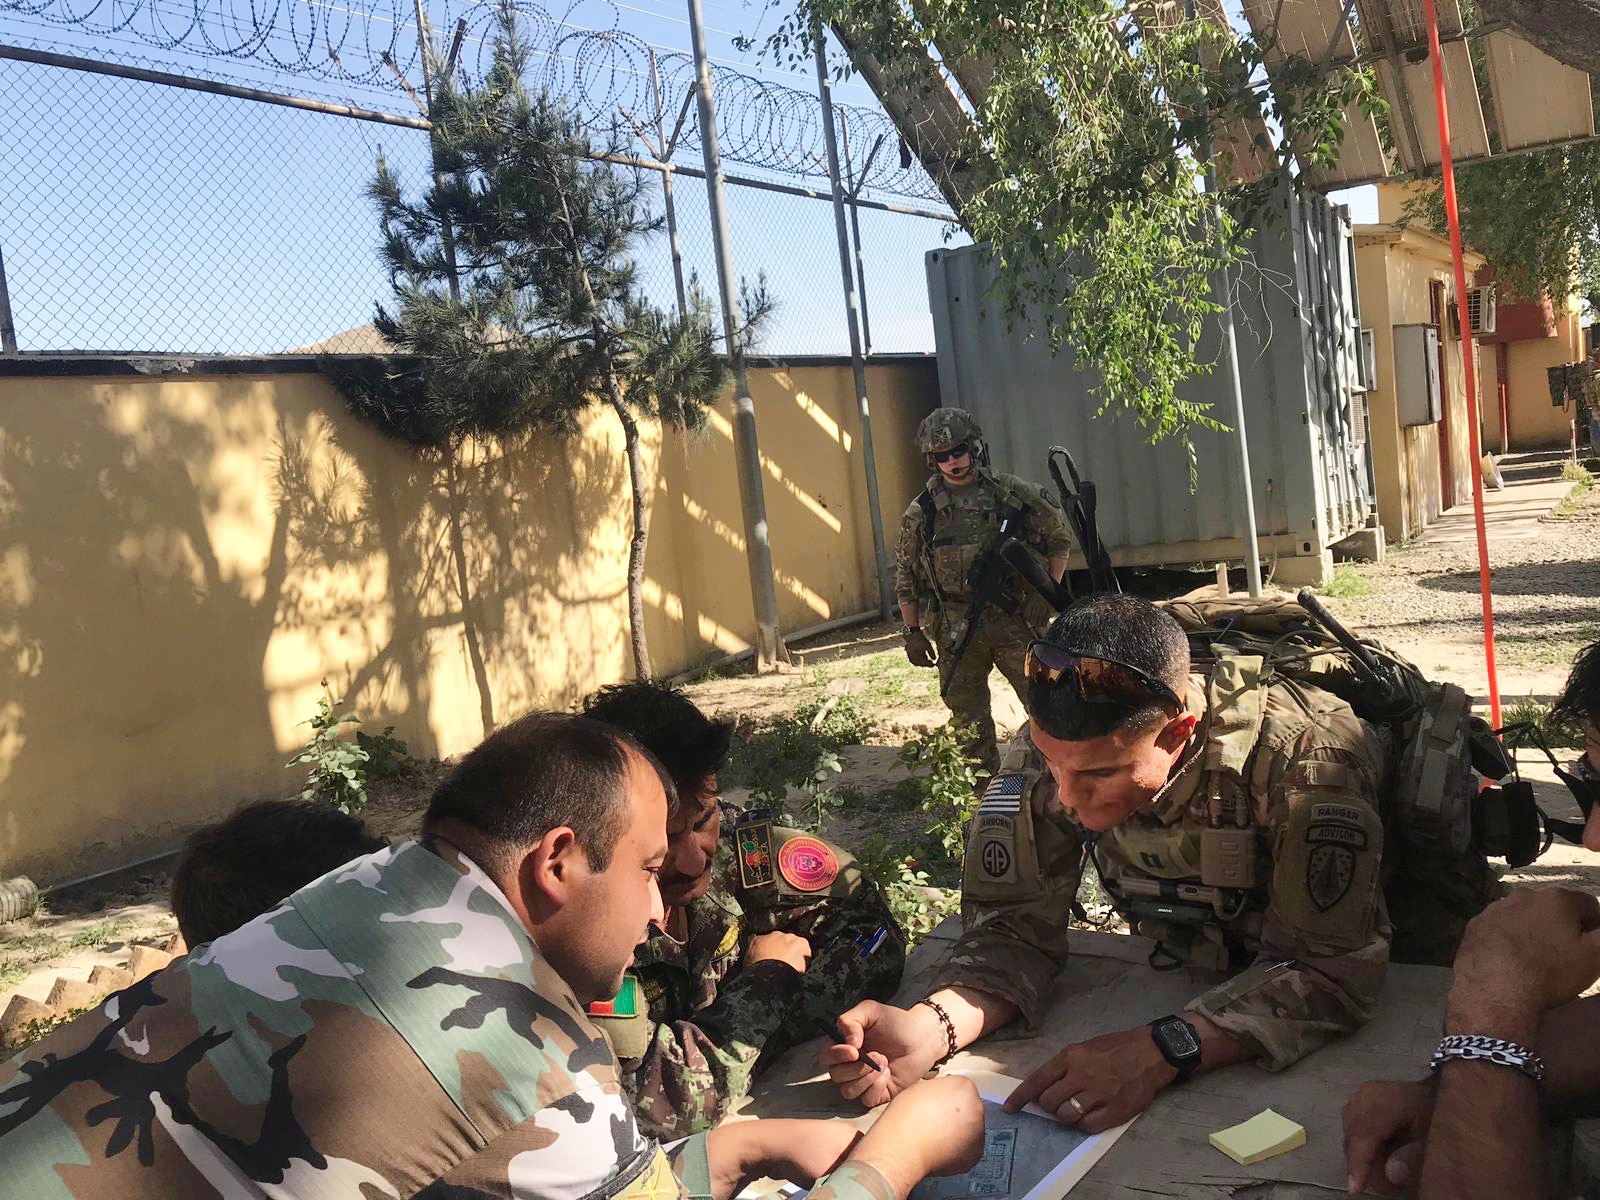 Making plans in Afghanistan